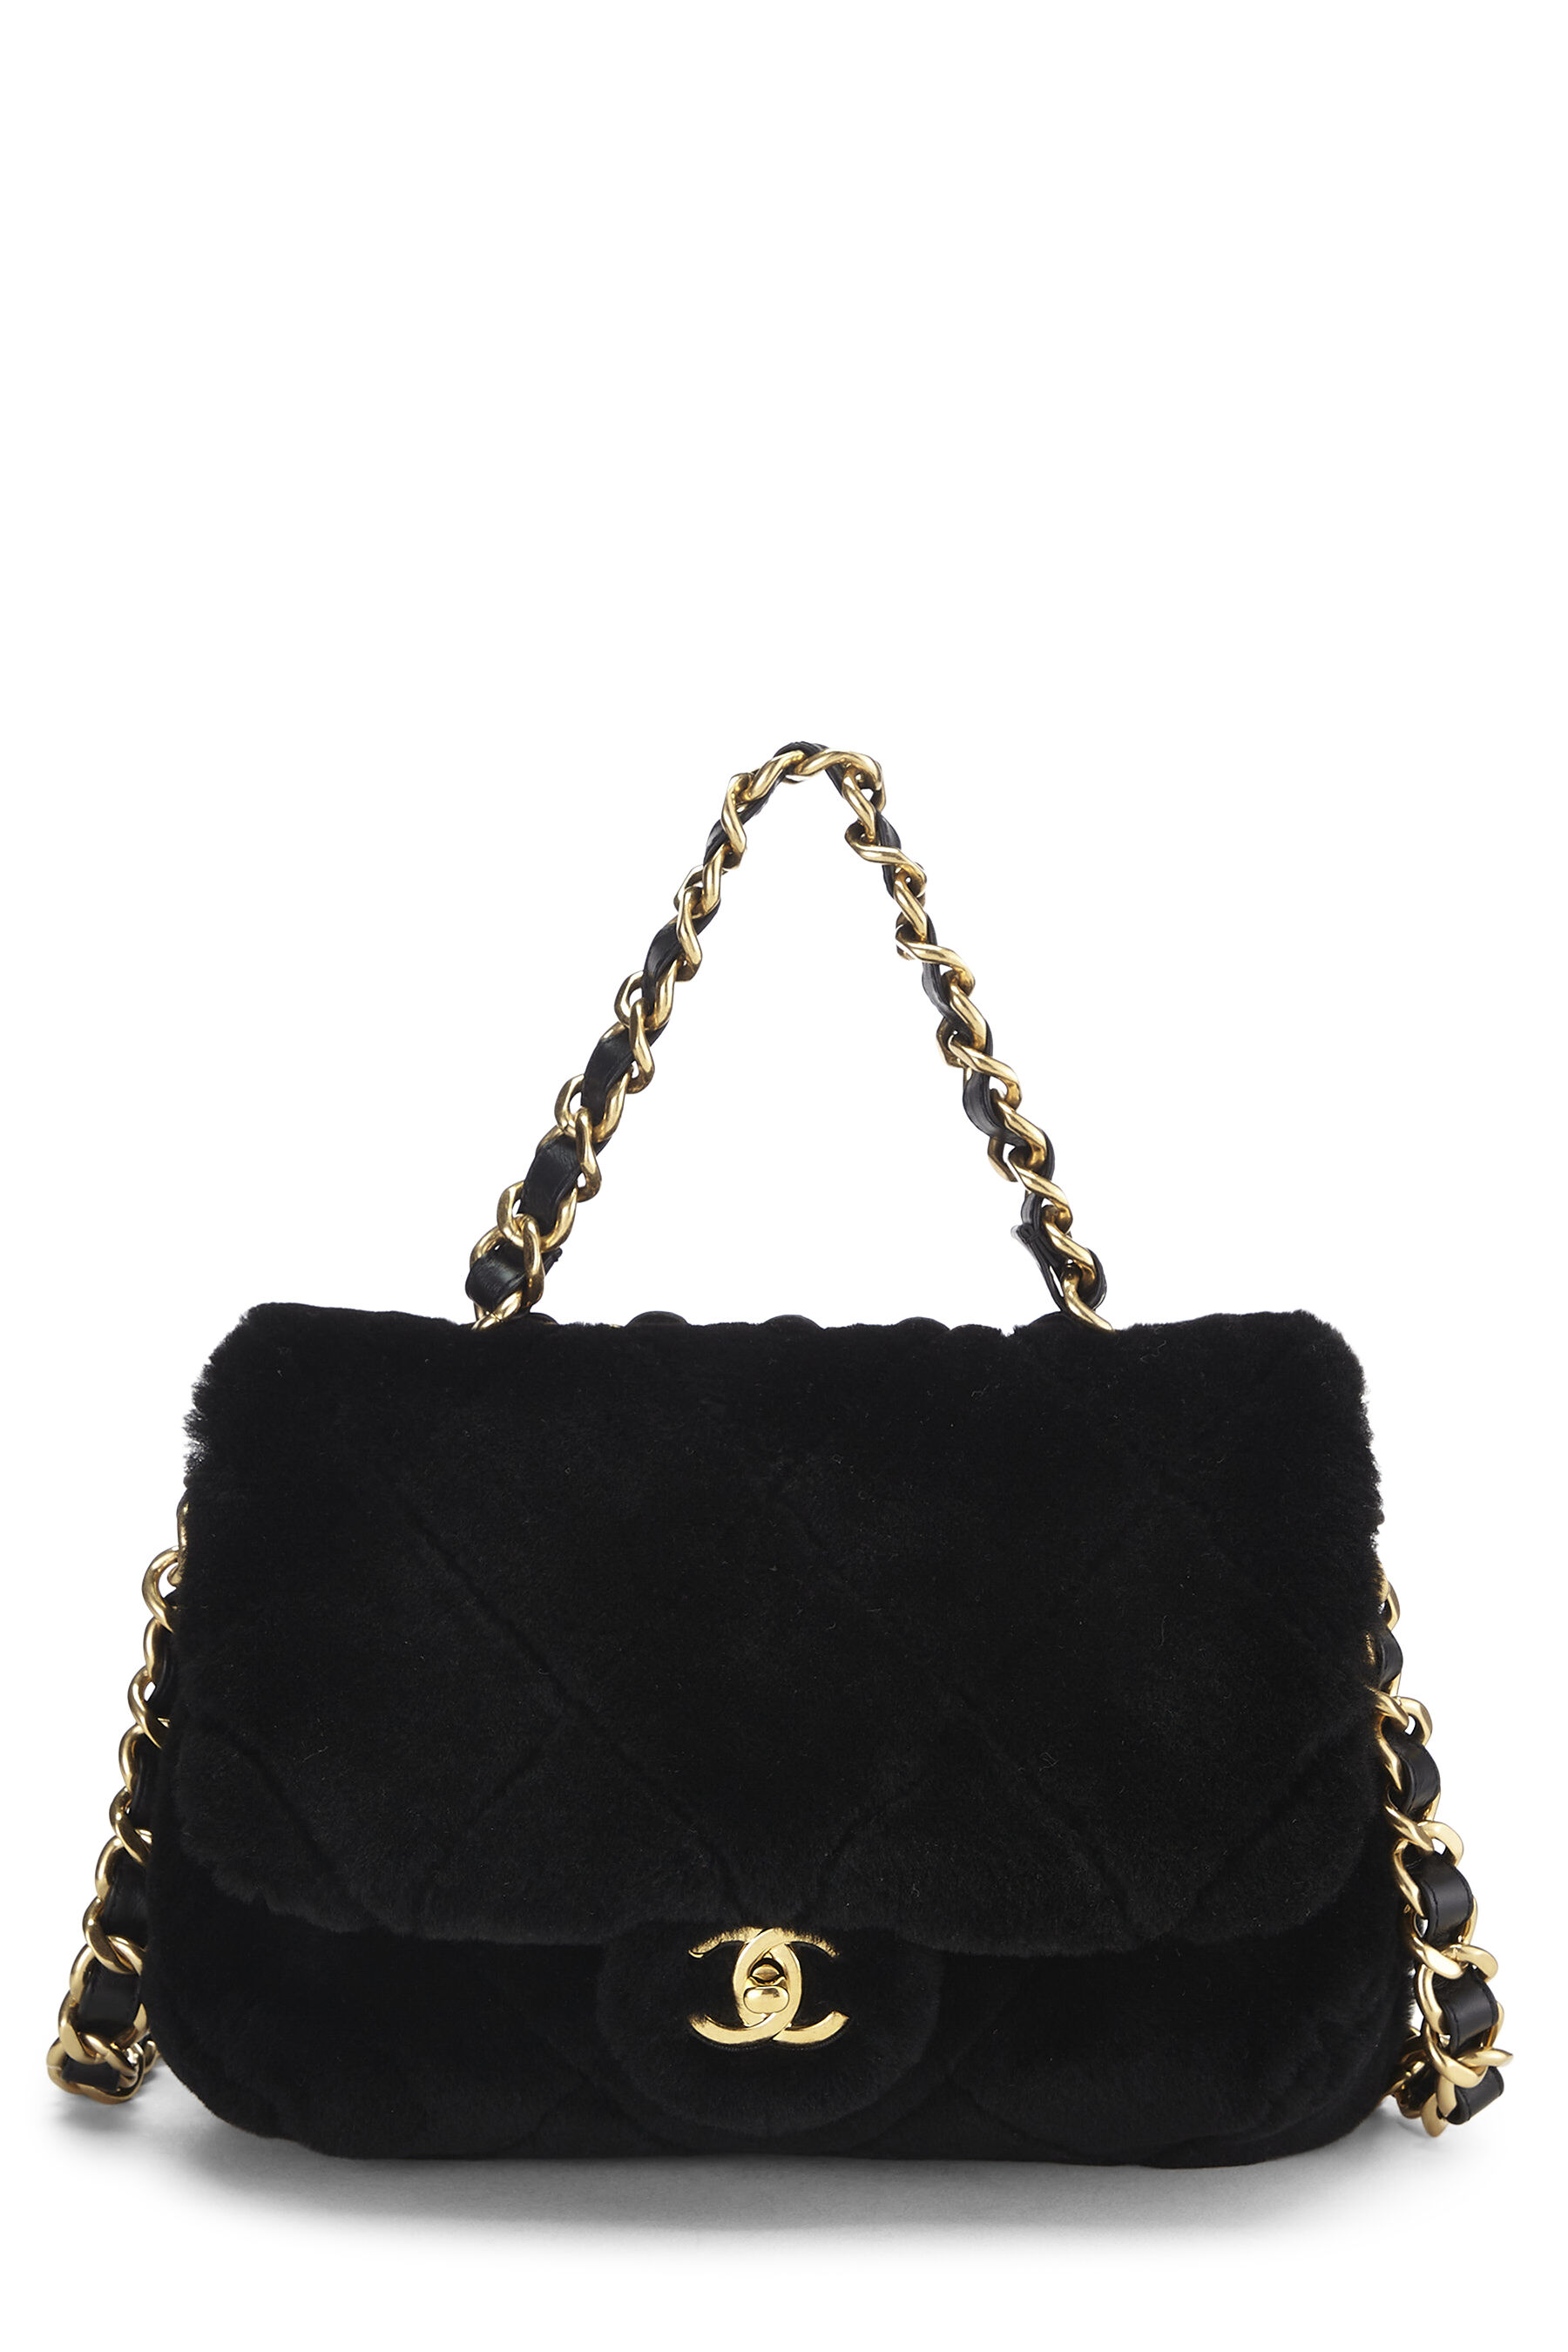 Chanel Black Suede Shearling Small Accordion Flap Bag – Ladybag